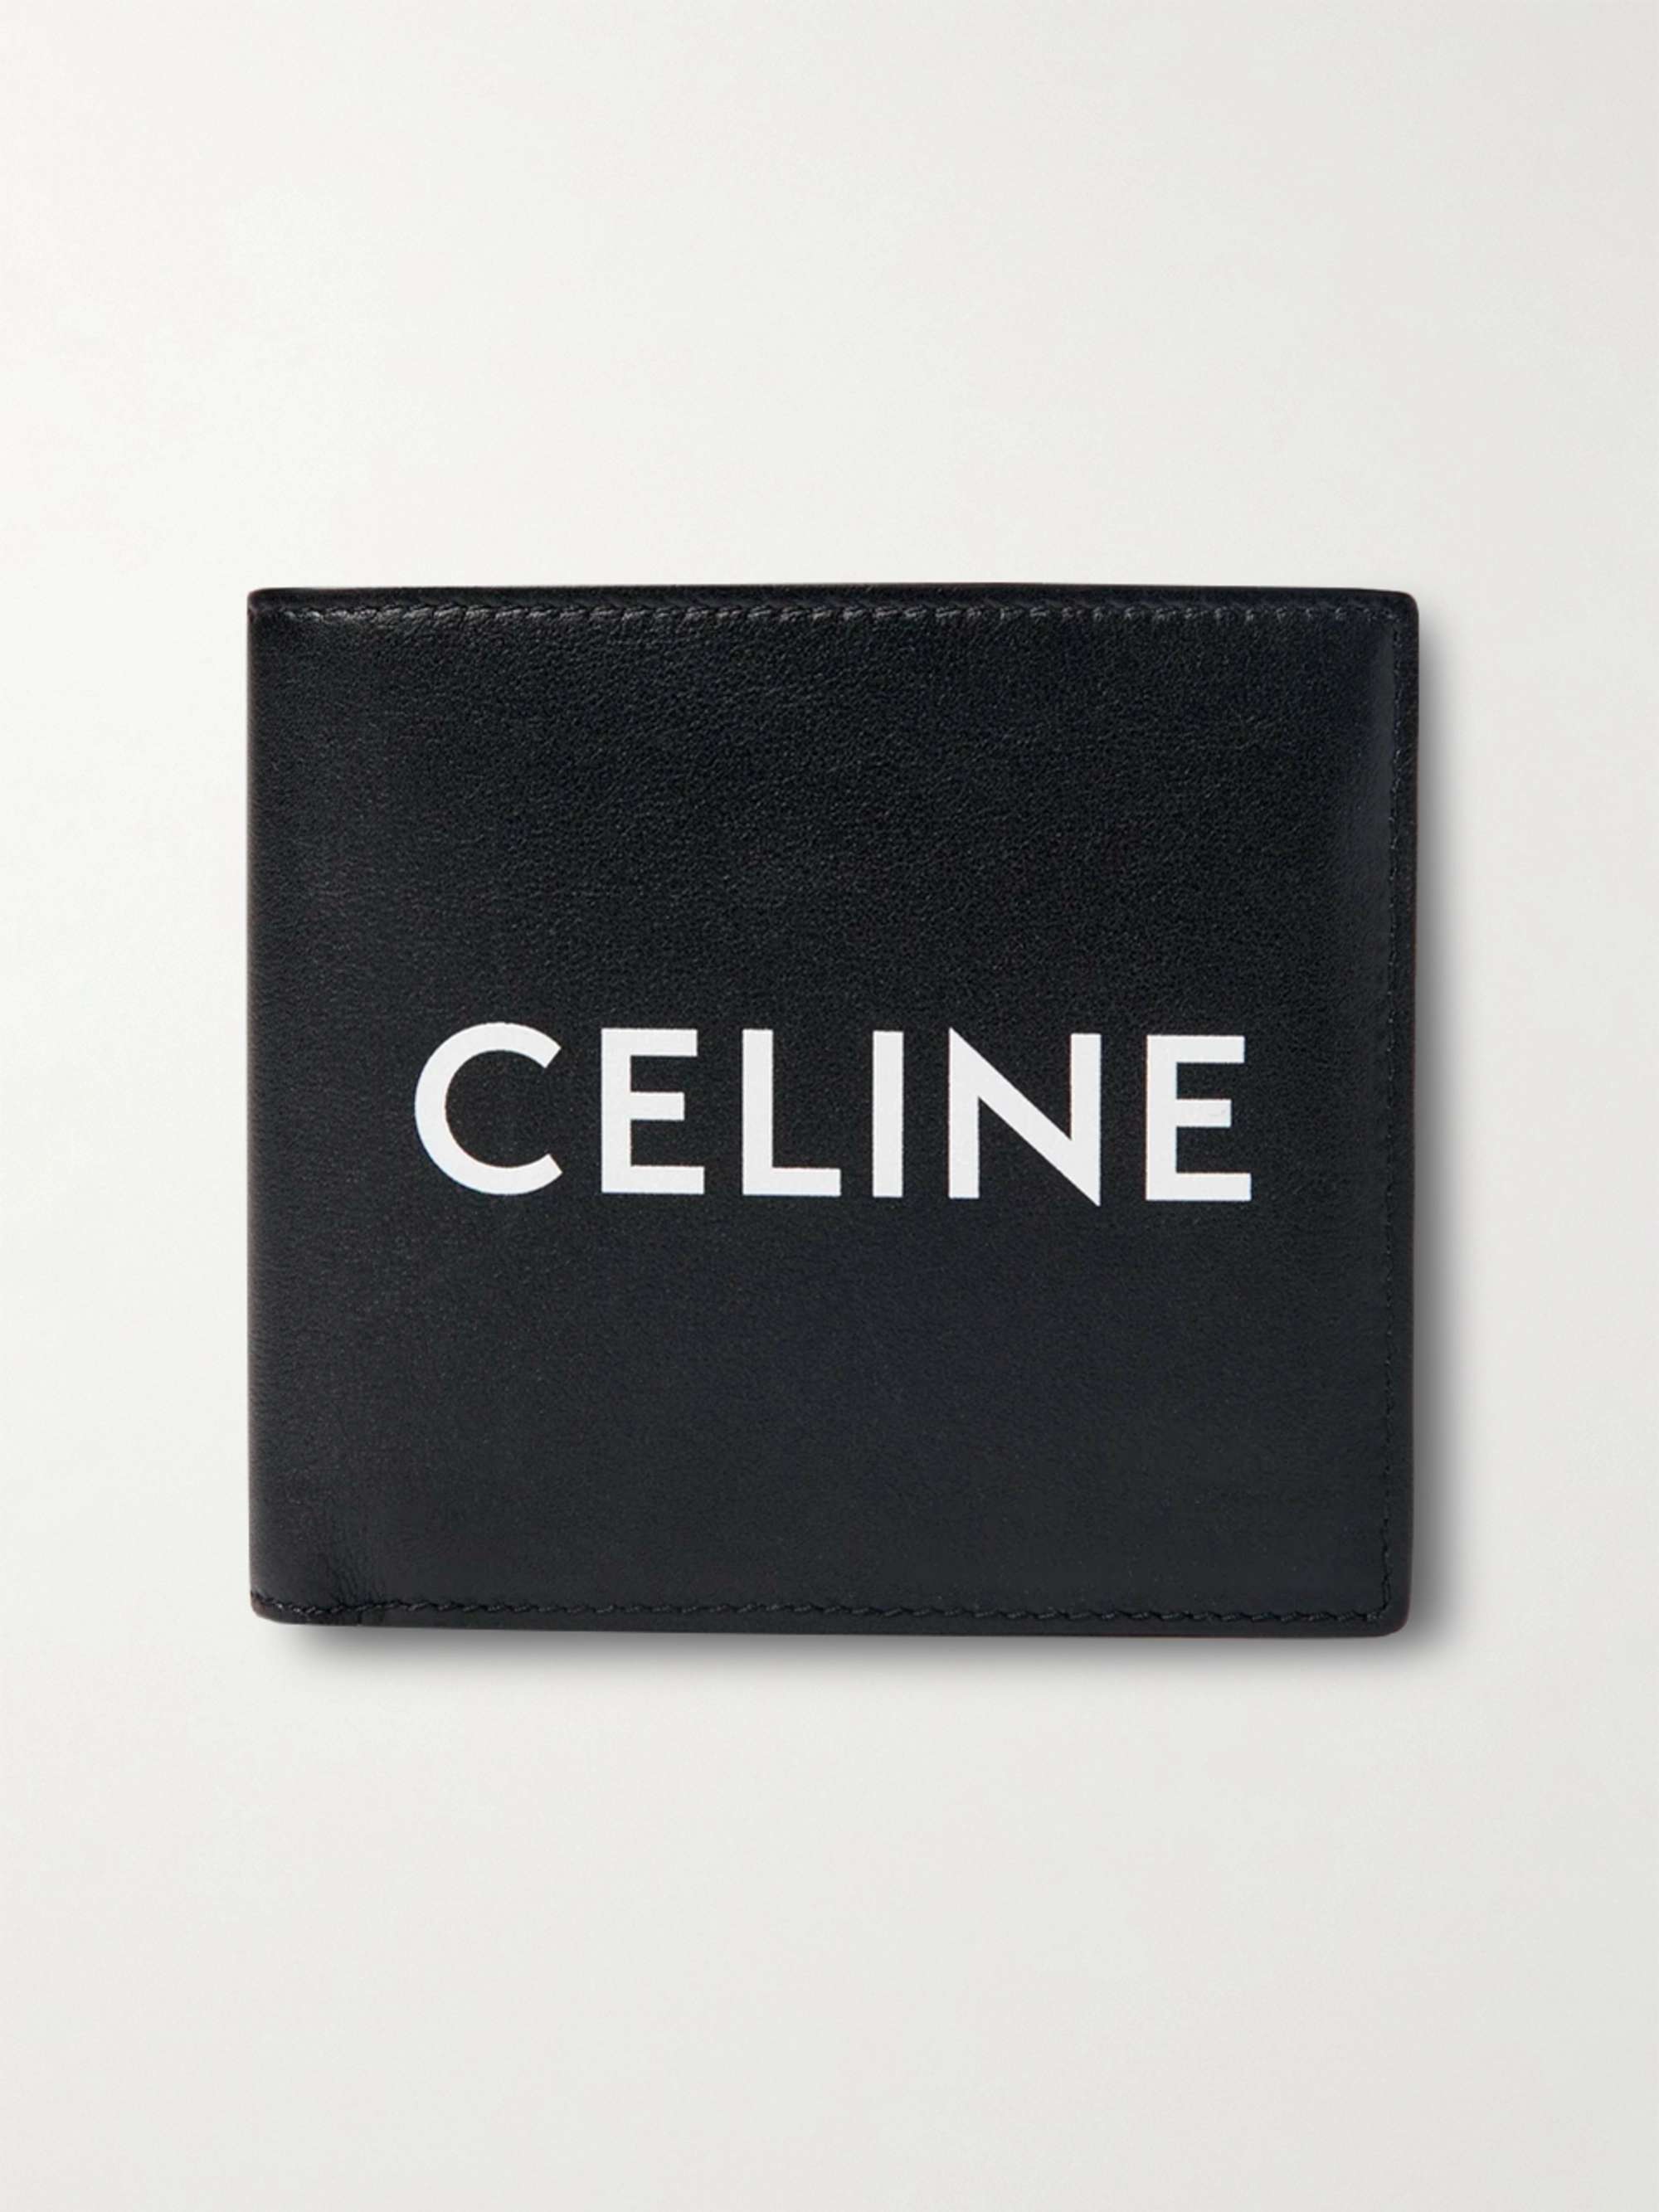 CELINE HOMME Logo-Print Leather Billfold Wallet for Men